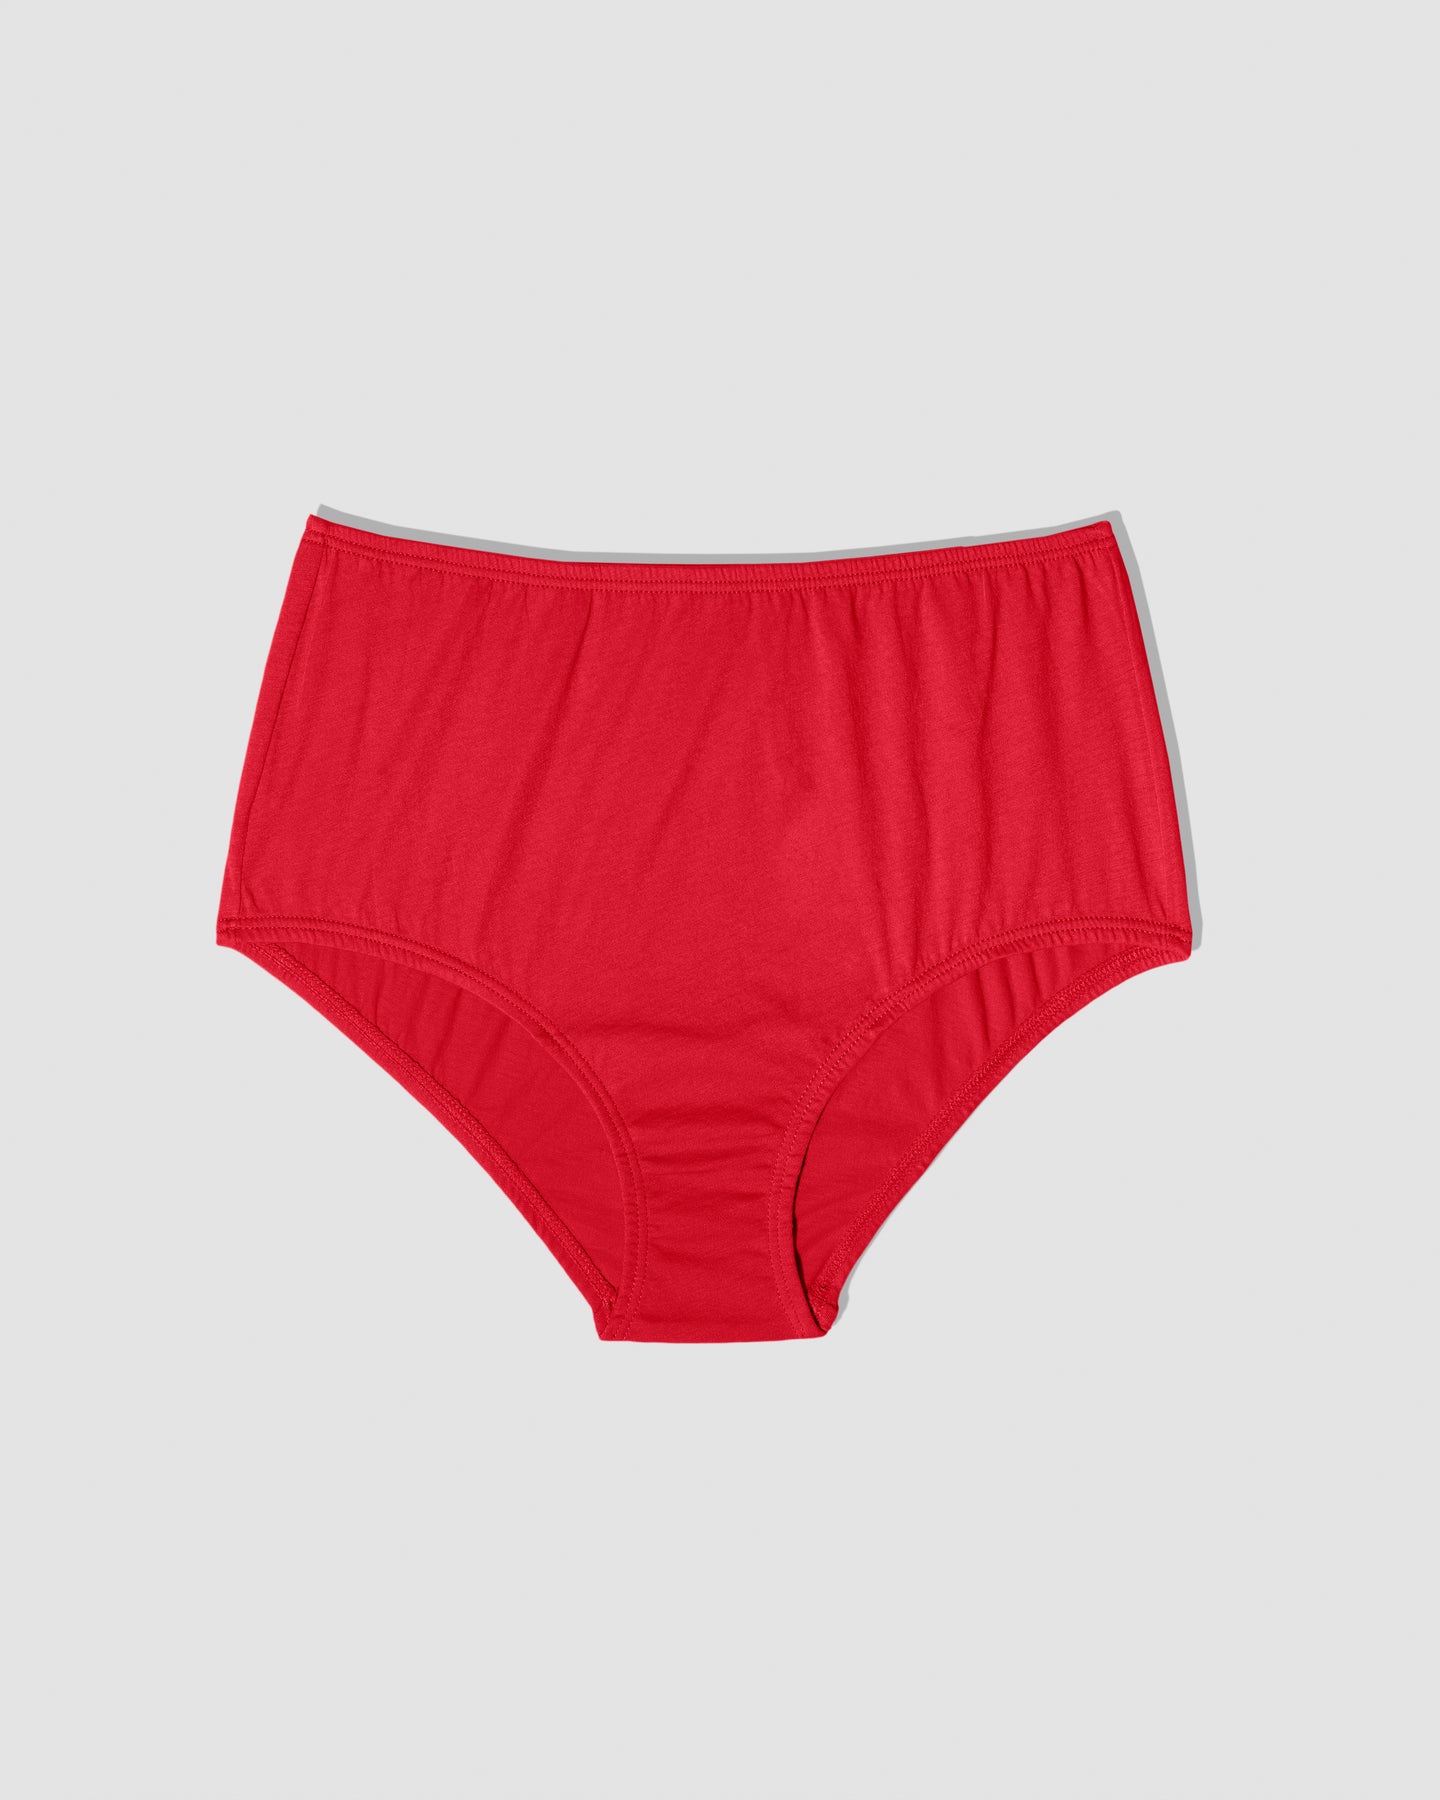 Honeycomb Design Elastic Abdomen High Waist Women Boxer Pants Cotton  Underwear